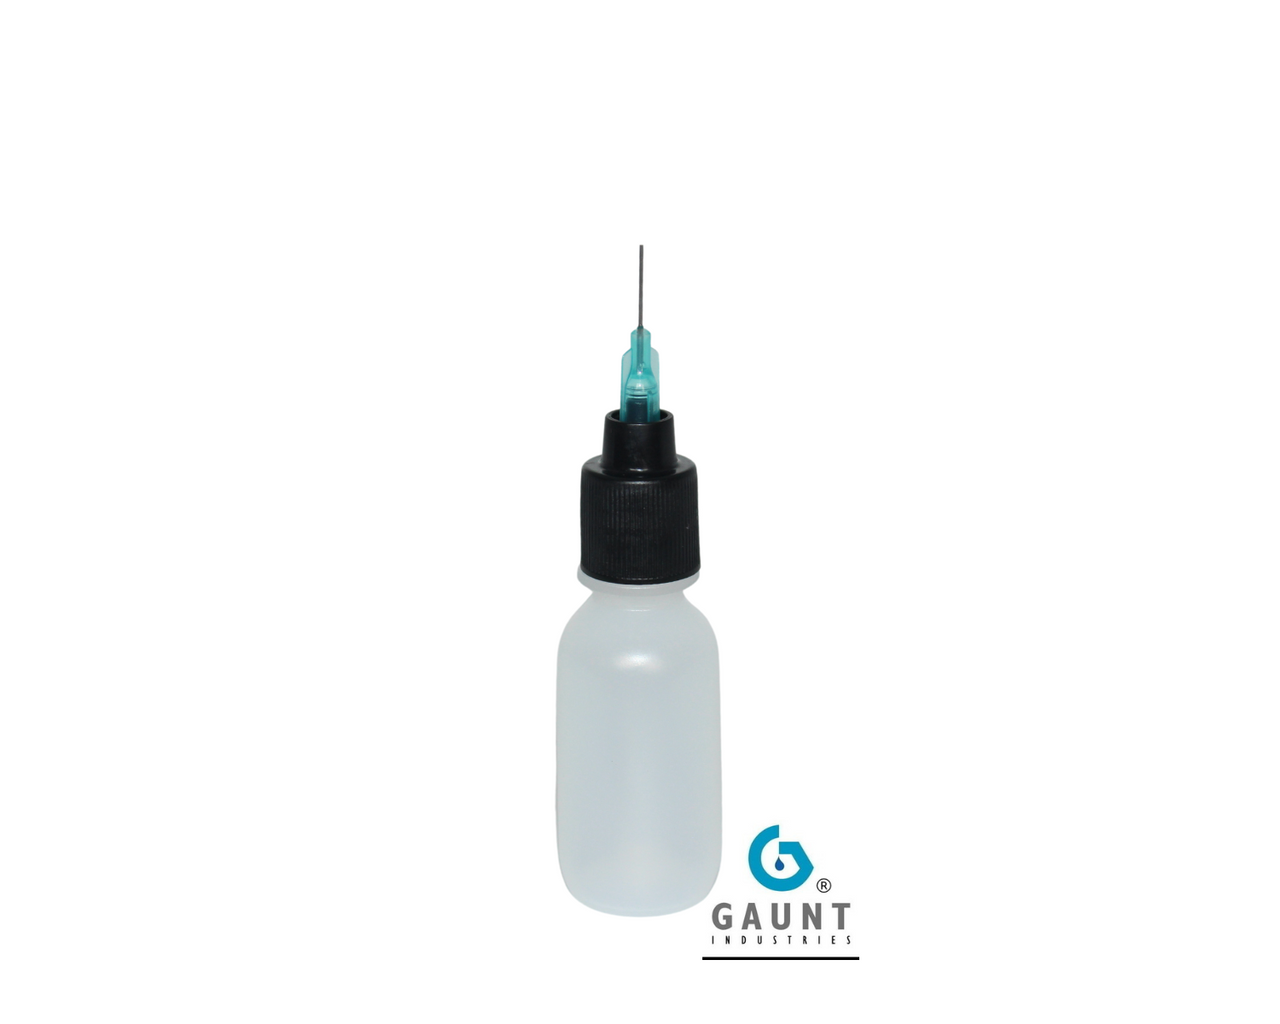 10Pcs Needle Tip Bottle Precision Plastic Applicator with White Cap 20ml